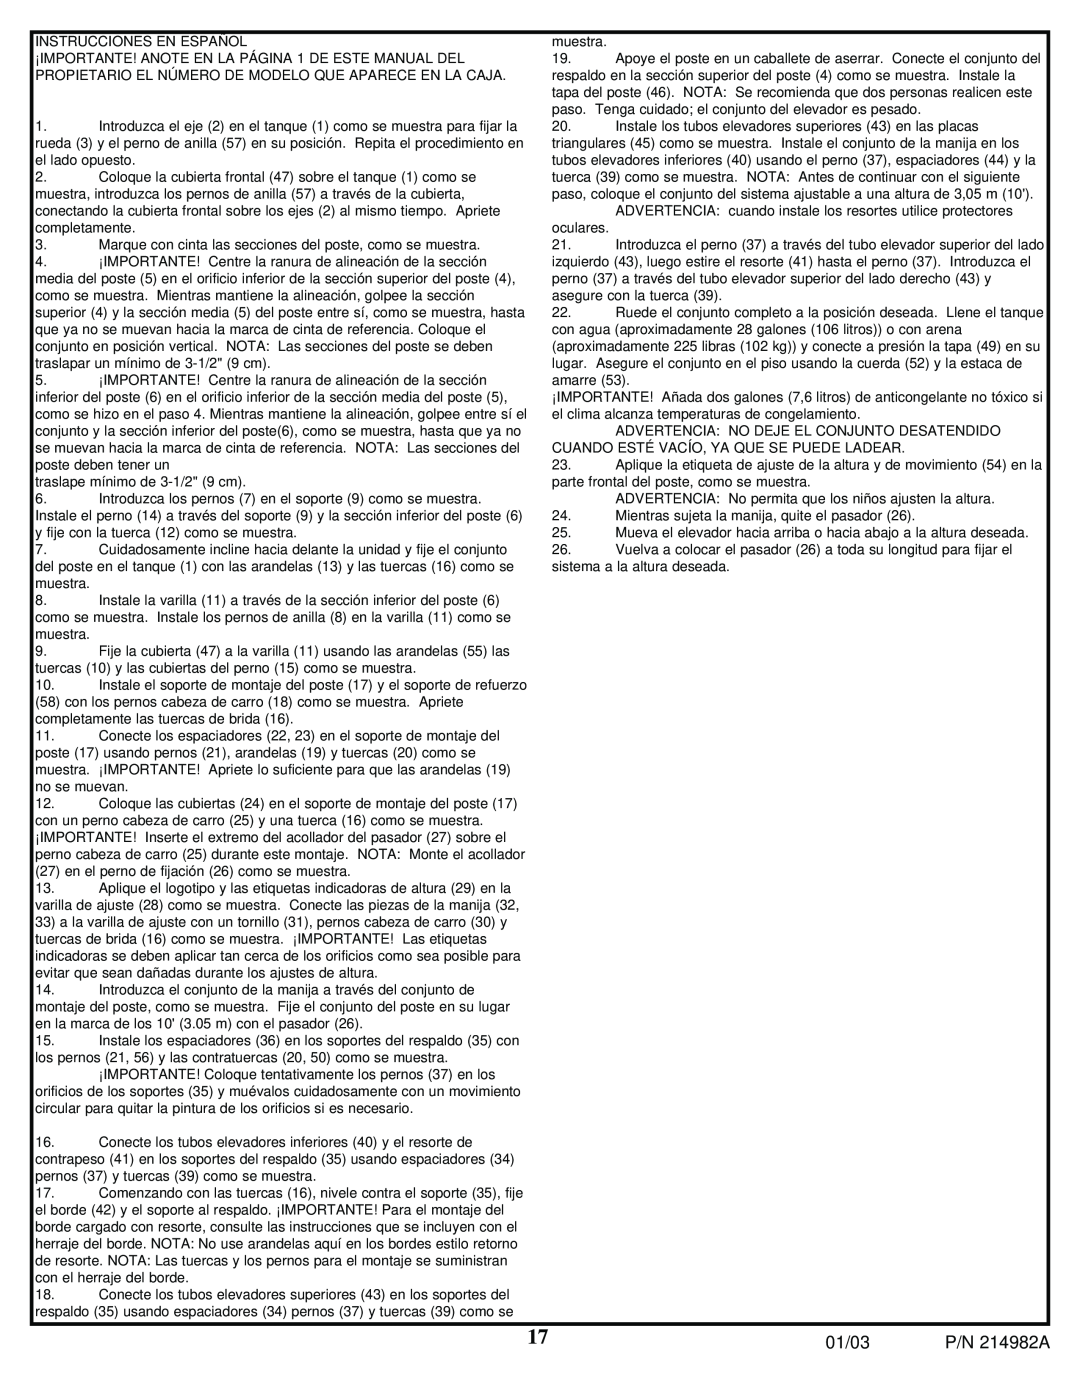 Huffy AIC250W manual 01/03, P/N 214982A, Instrucciones En Español 